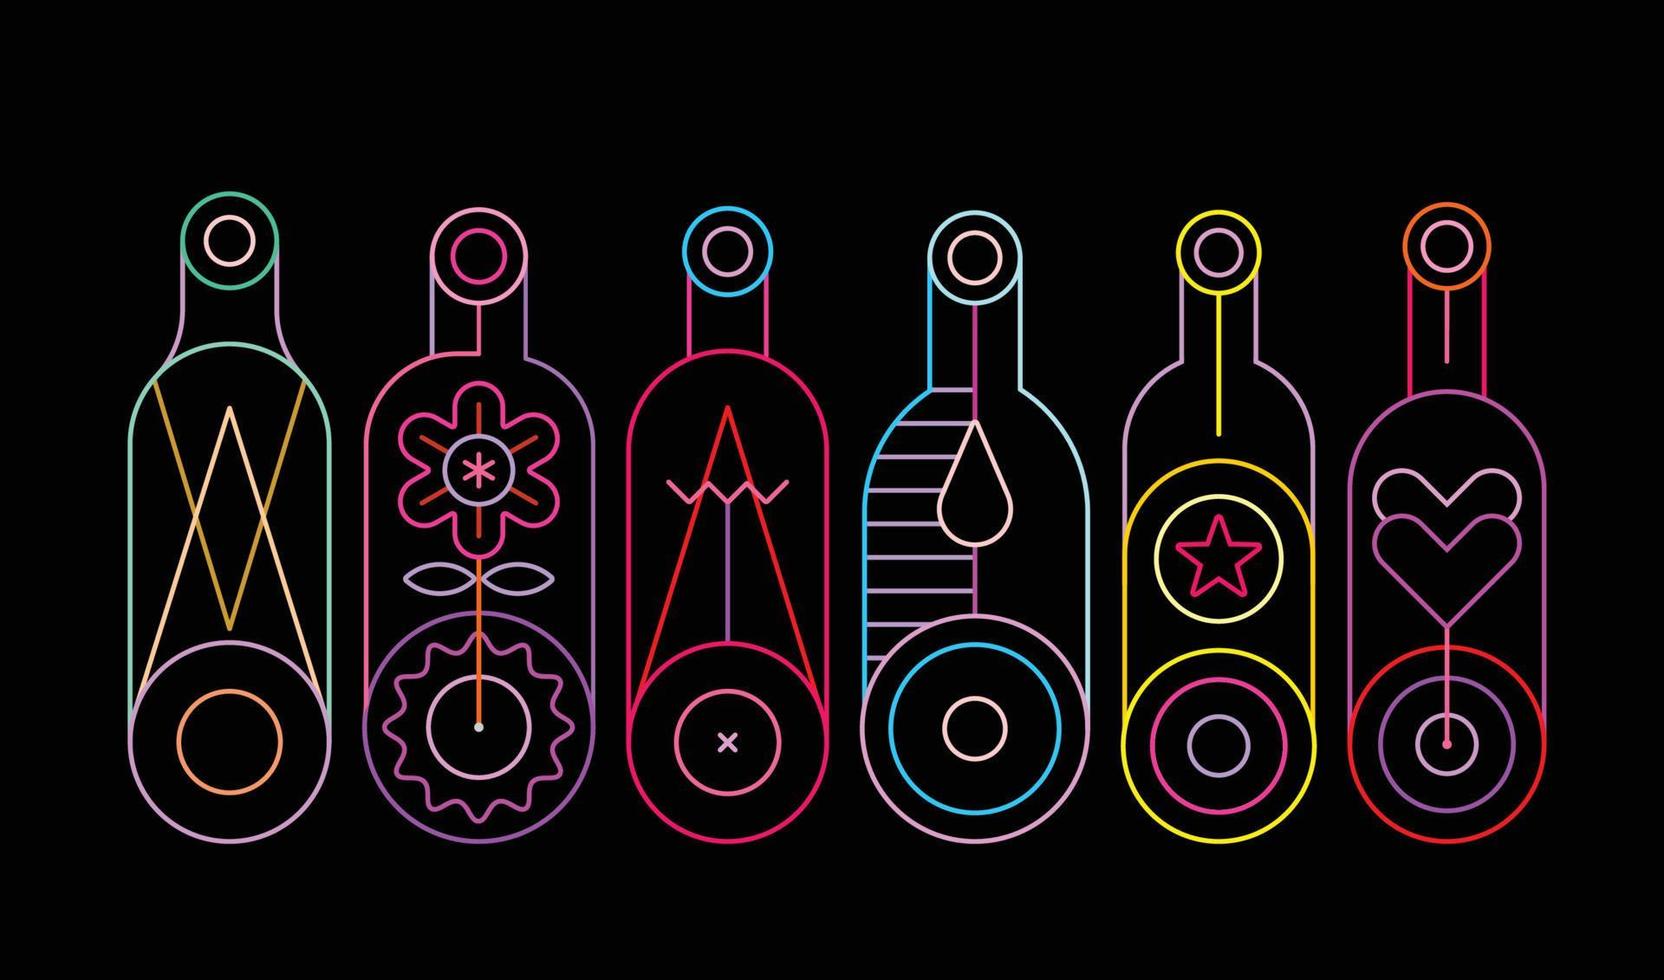 Wine Bottles Neon Silhouettes vector